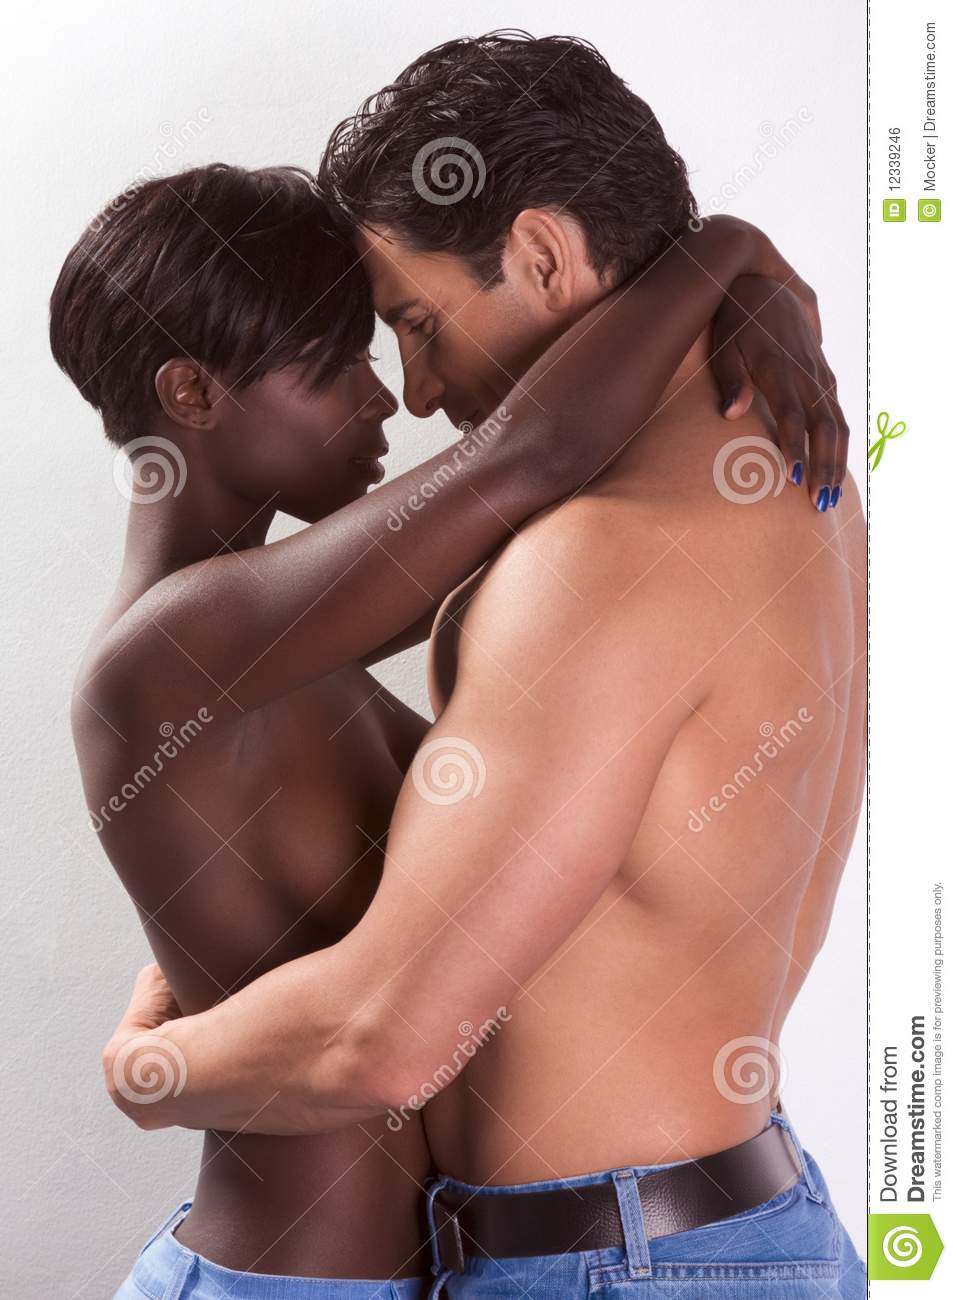 Black girls kissing sex - Hot Nude